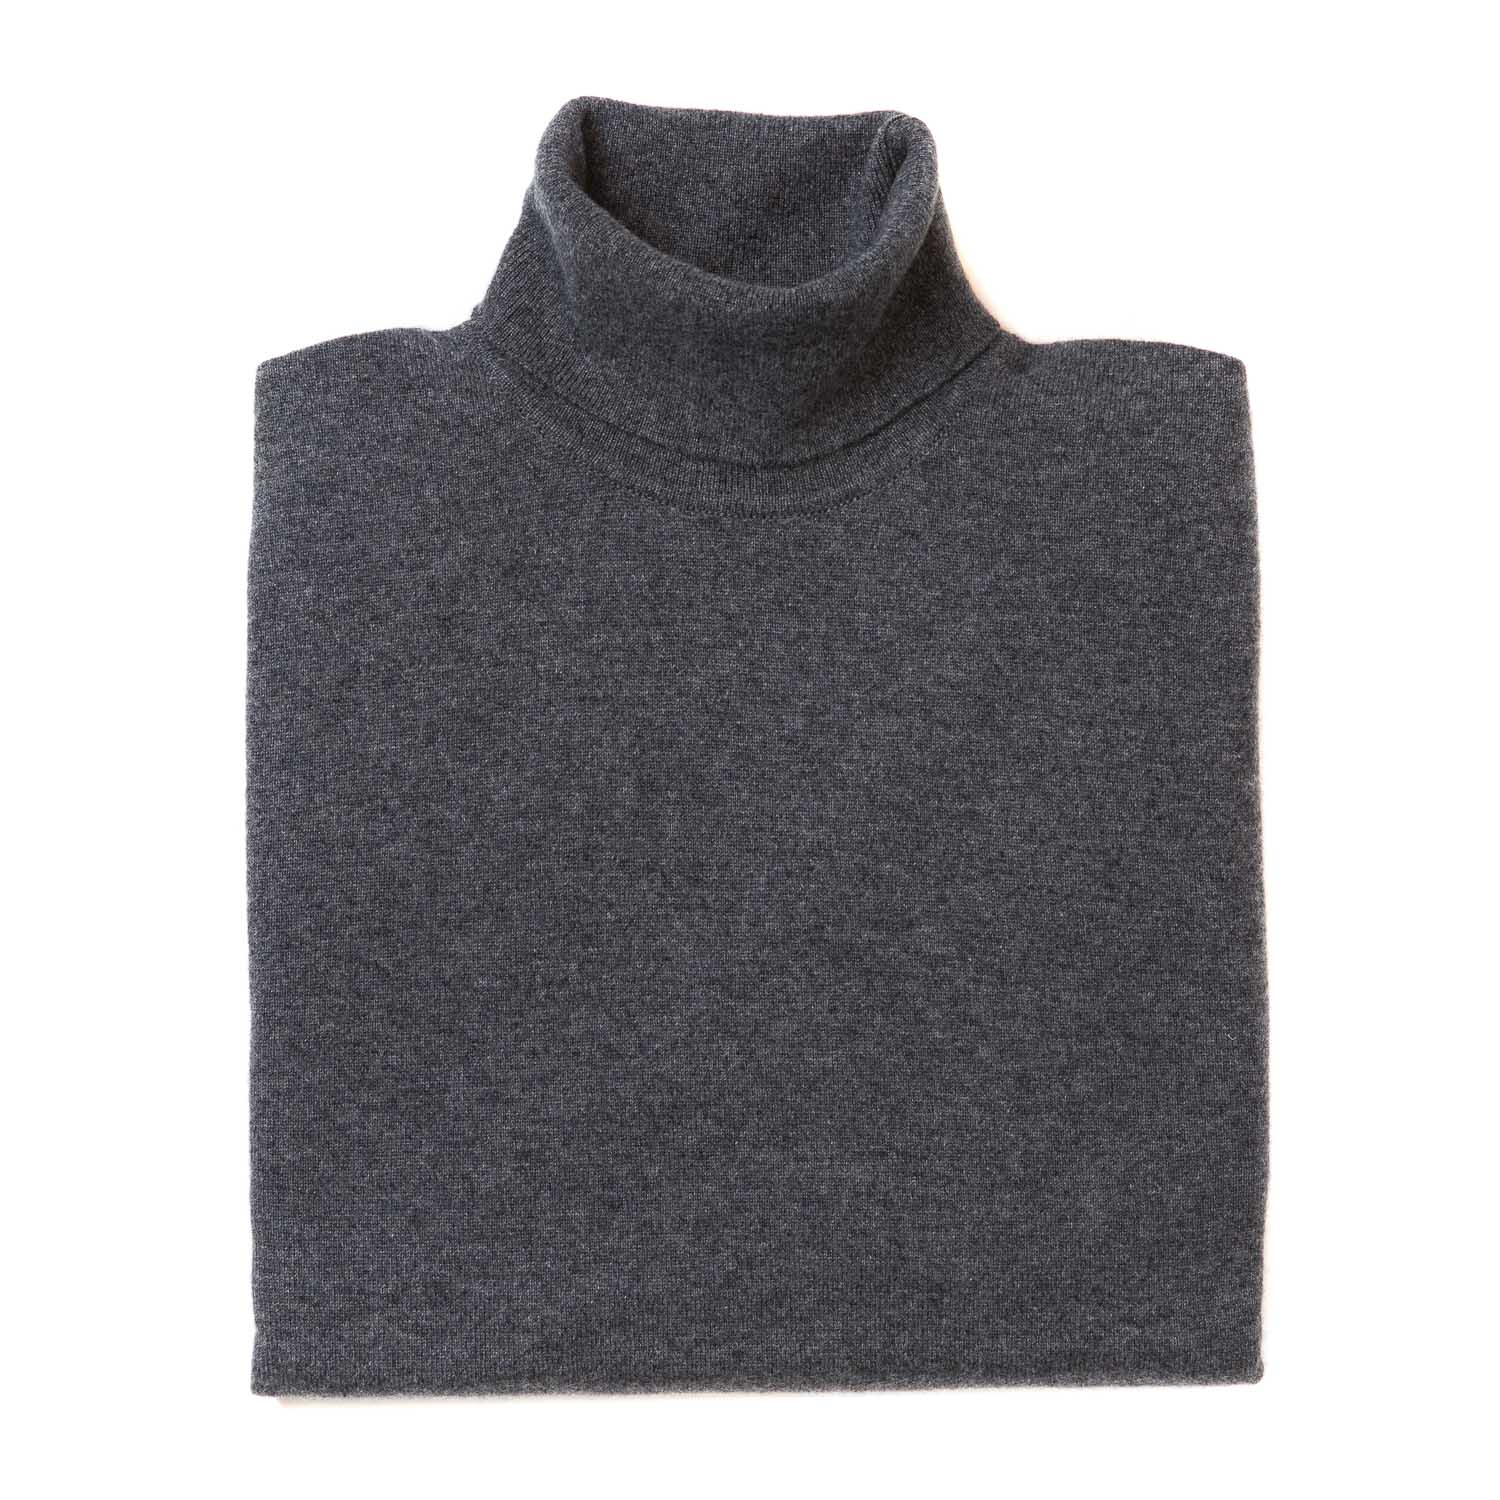 Turtleneck sweater 